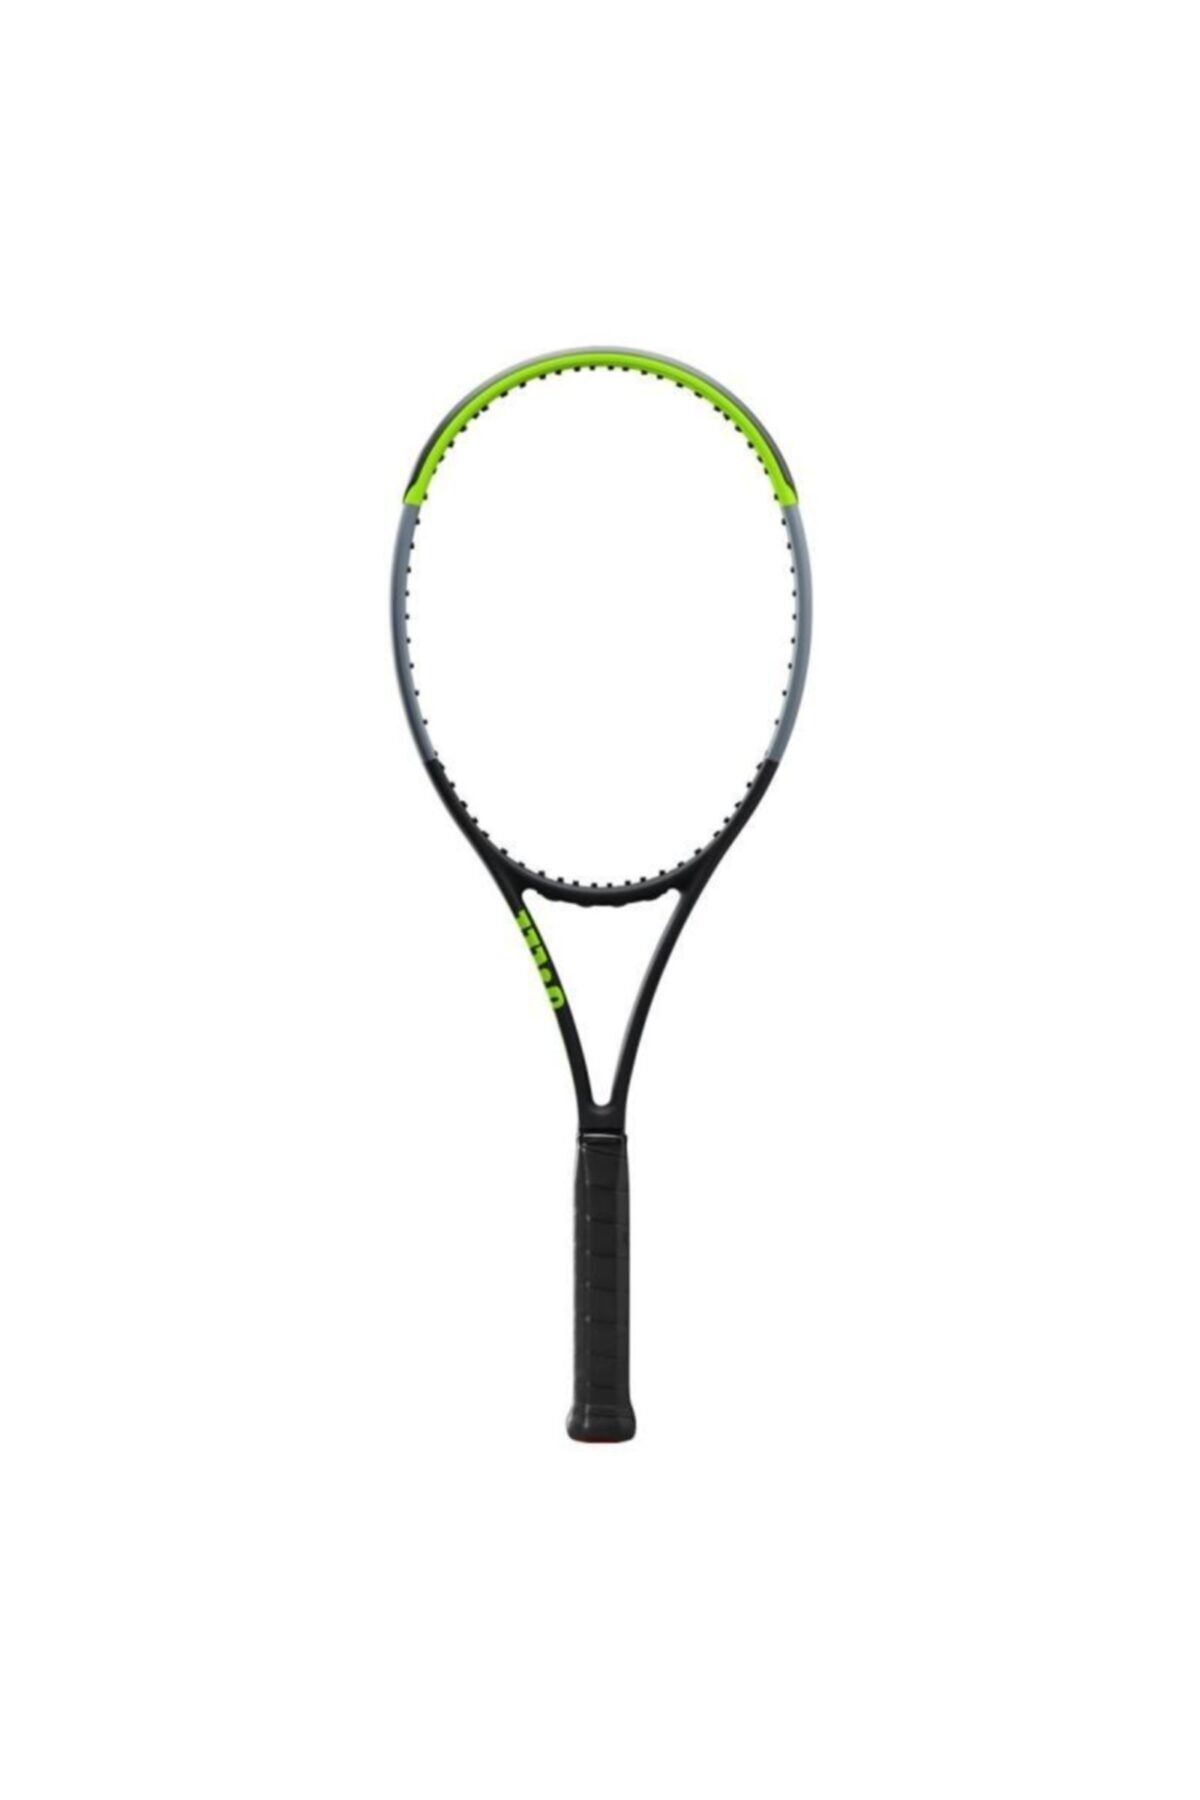 Wilson Tenis Raketi Blade 98s V7.0 Tns Frm 3 Wr013811u3